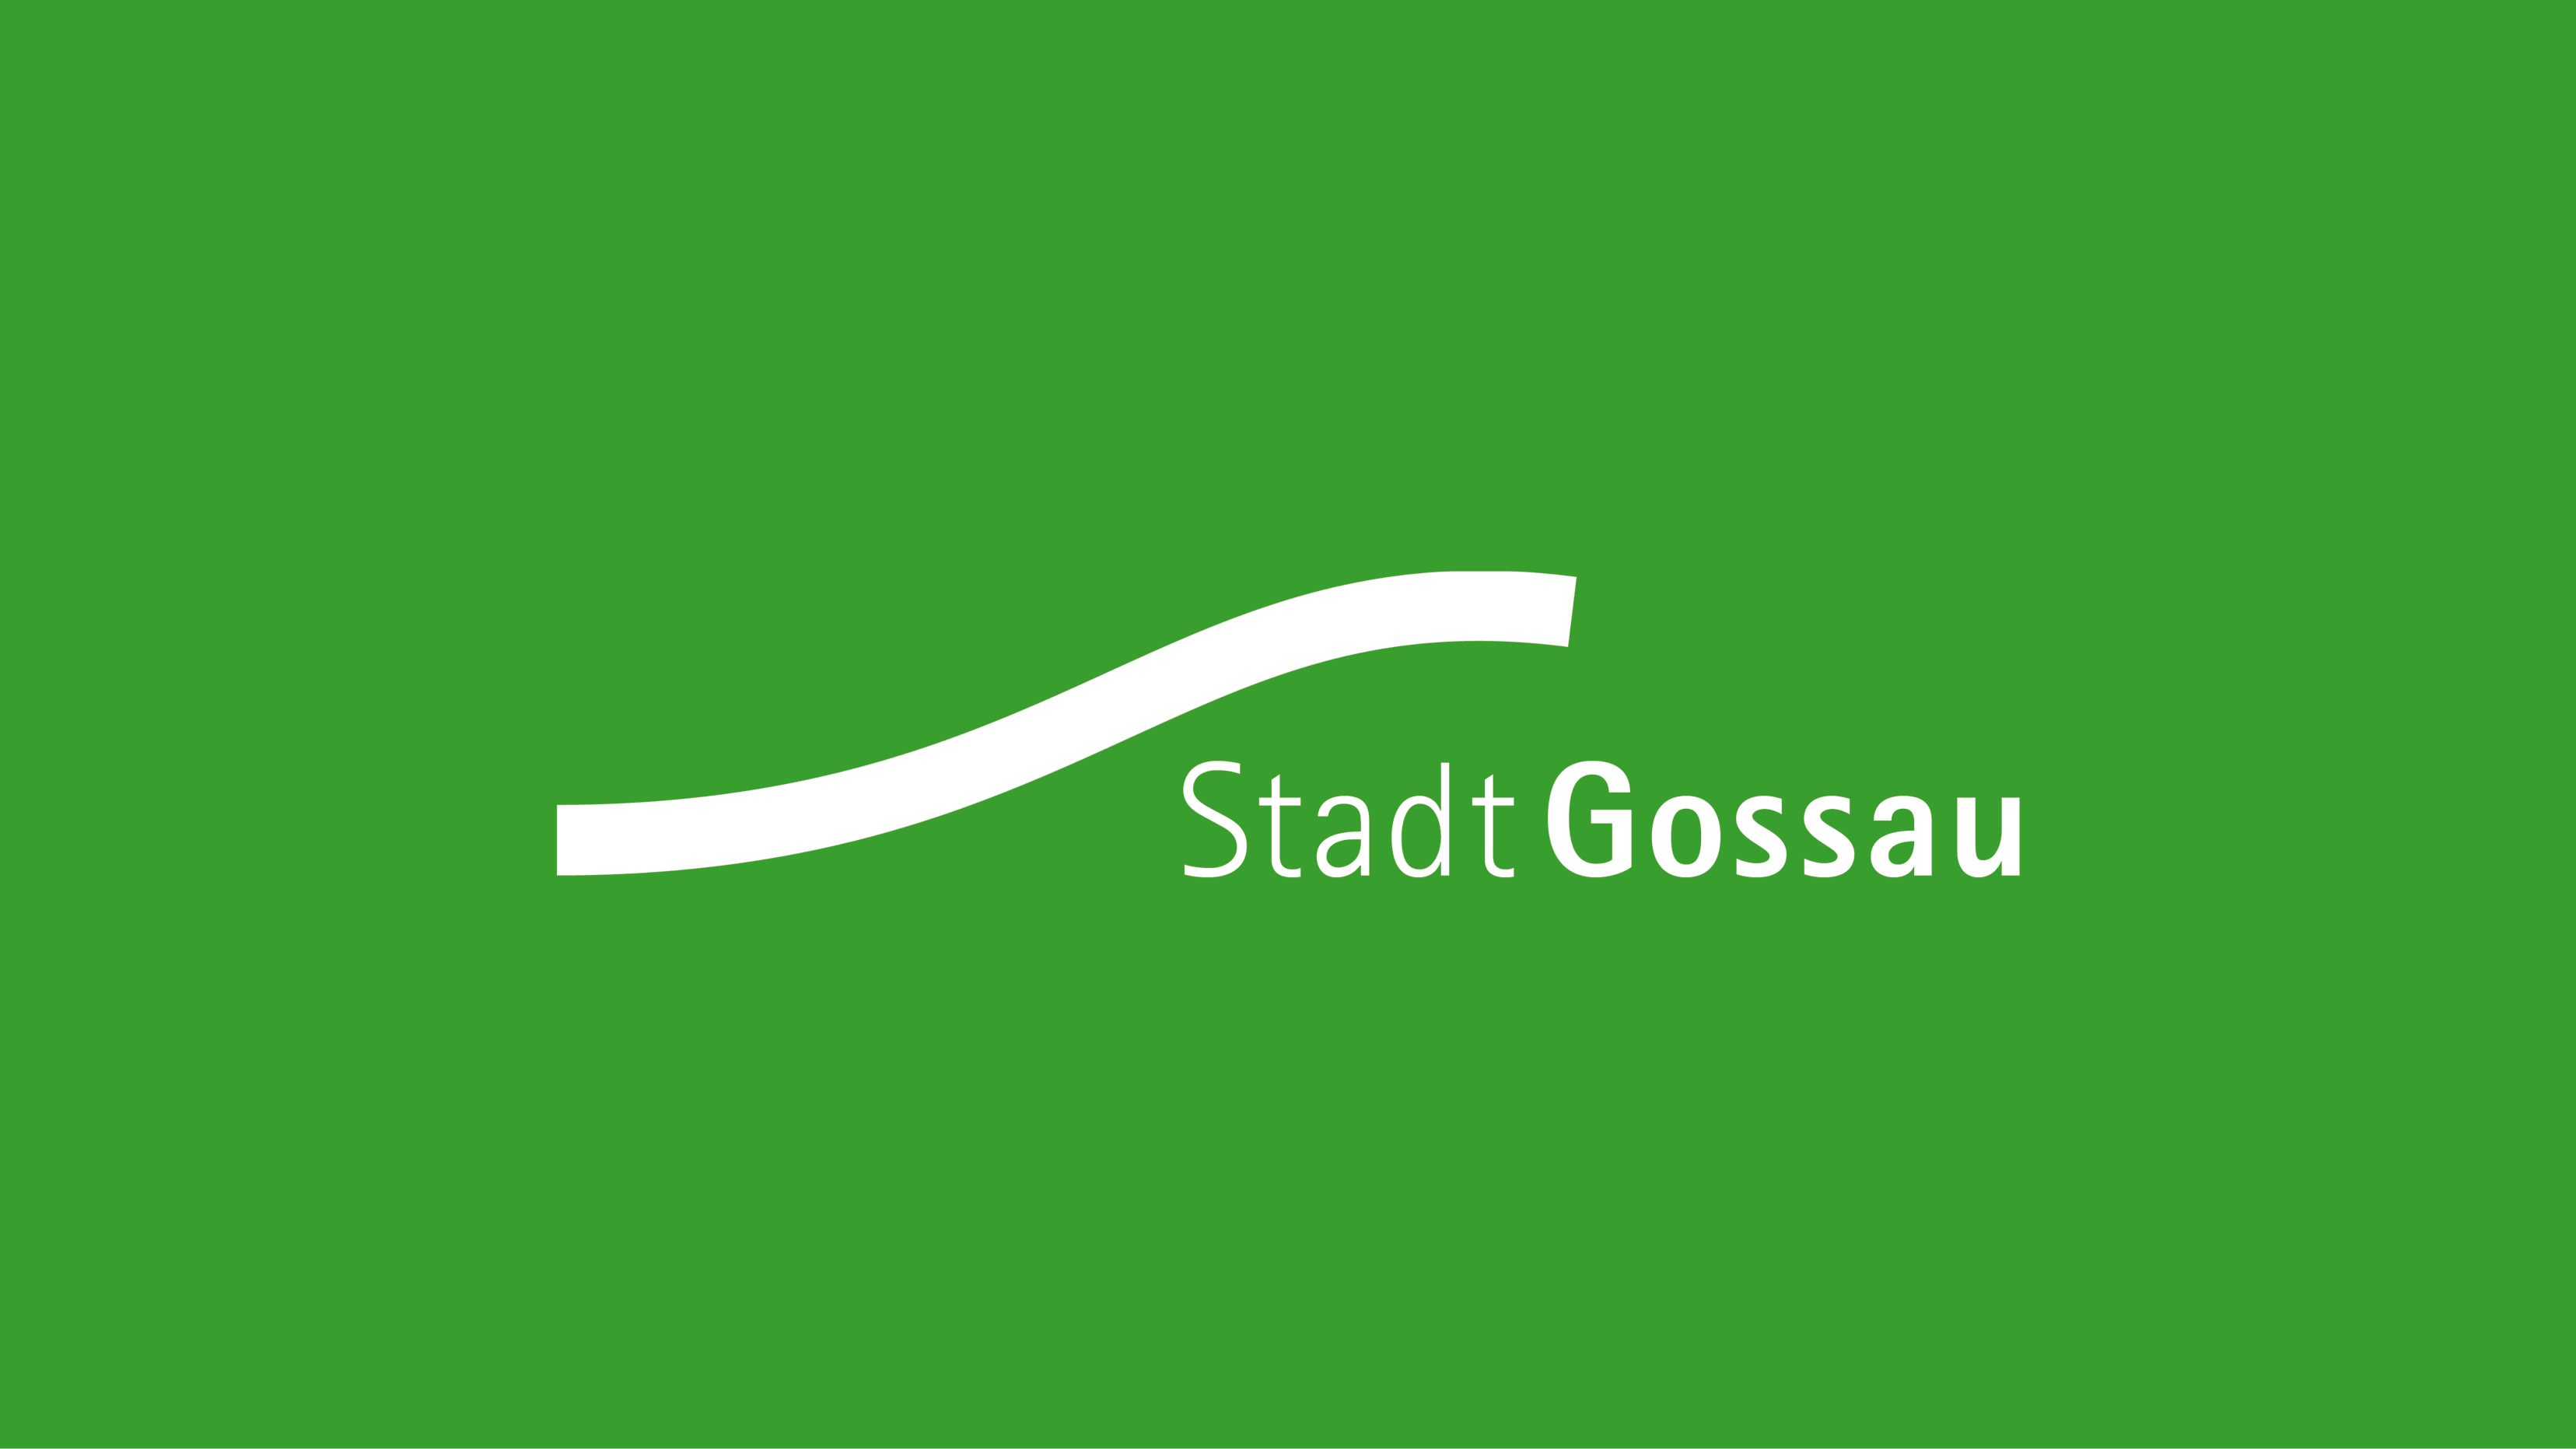 [Translate to Italian:] Stadt Gossau